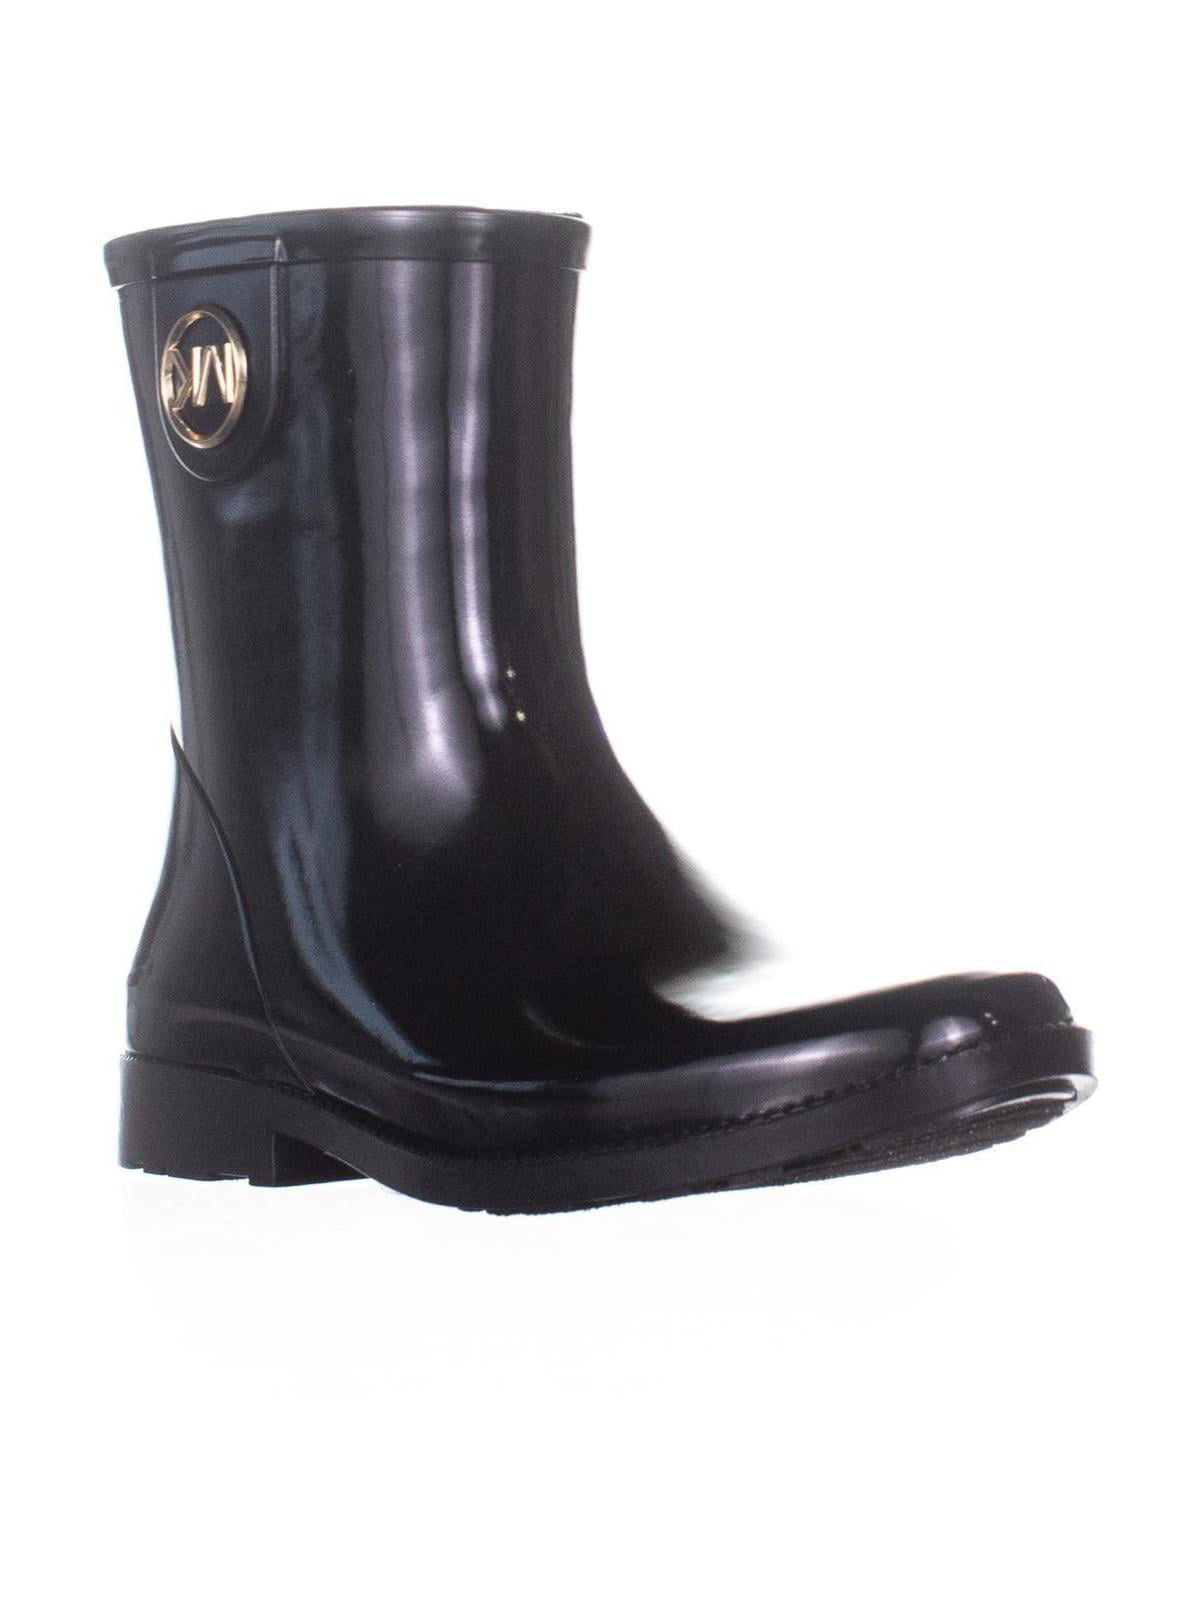 michael kors benji rain boots